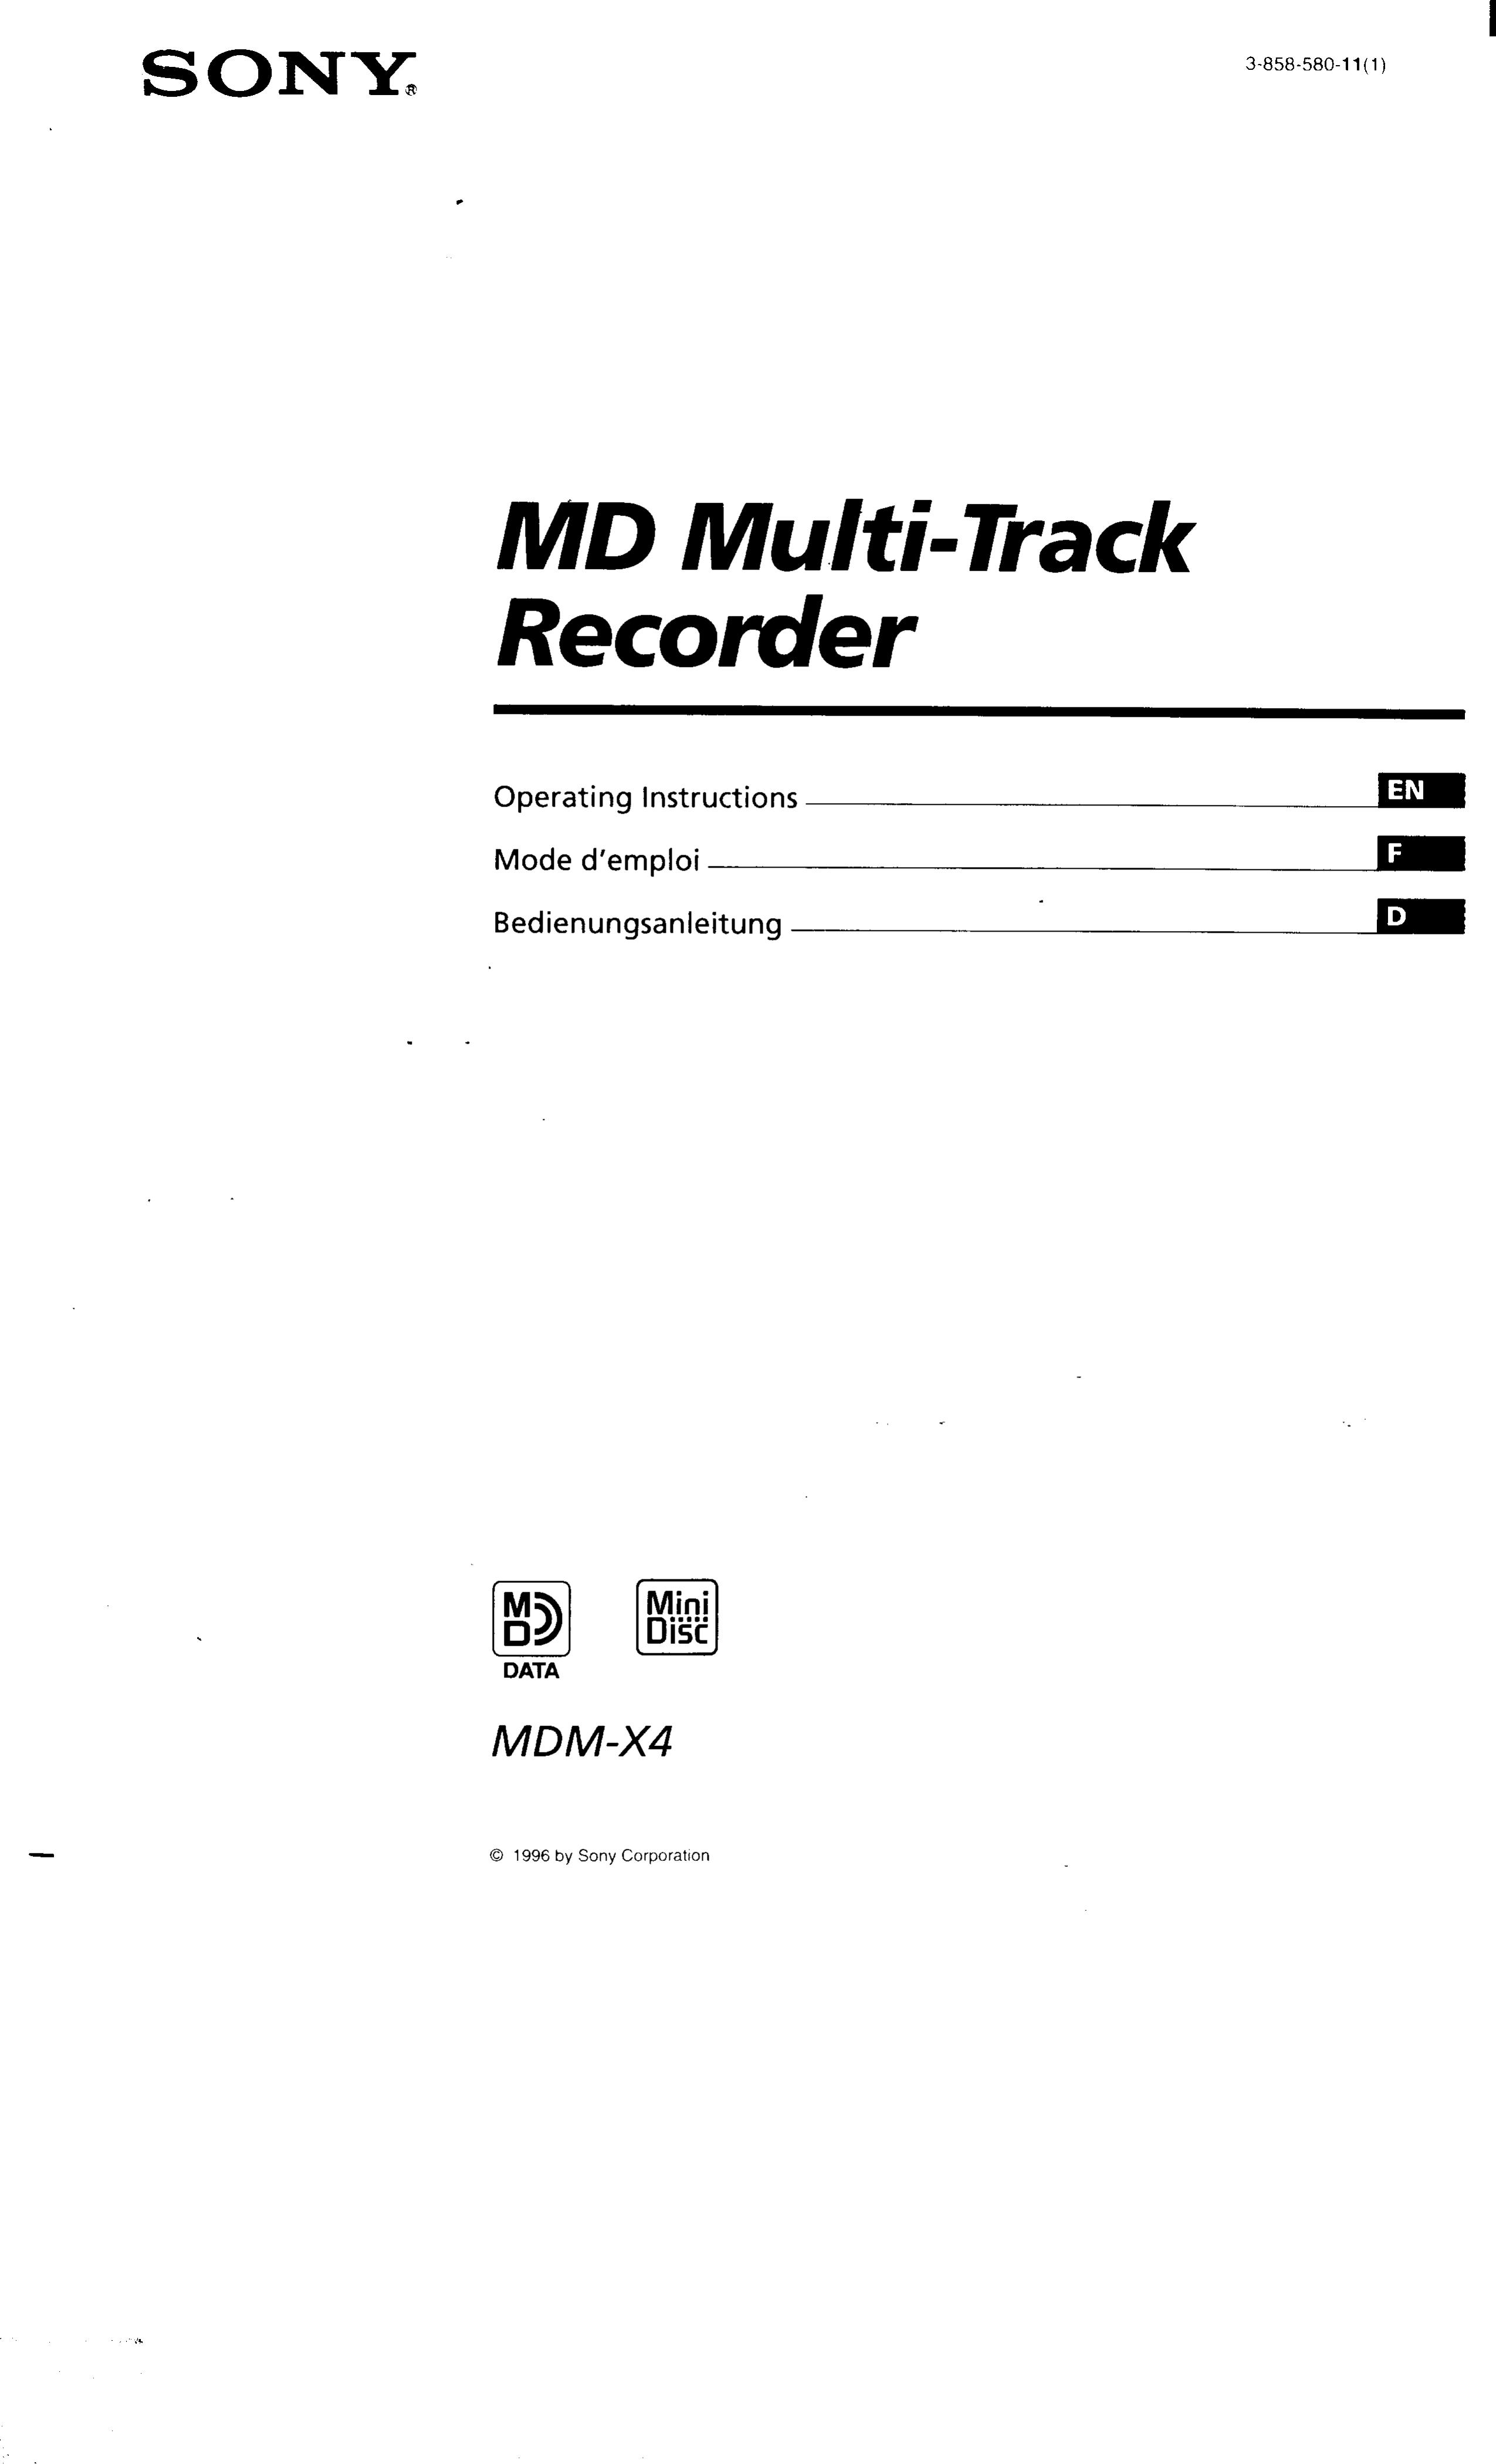 Sony MDM-X4 Recording Equipment User Manual